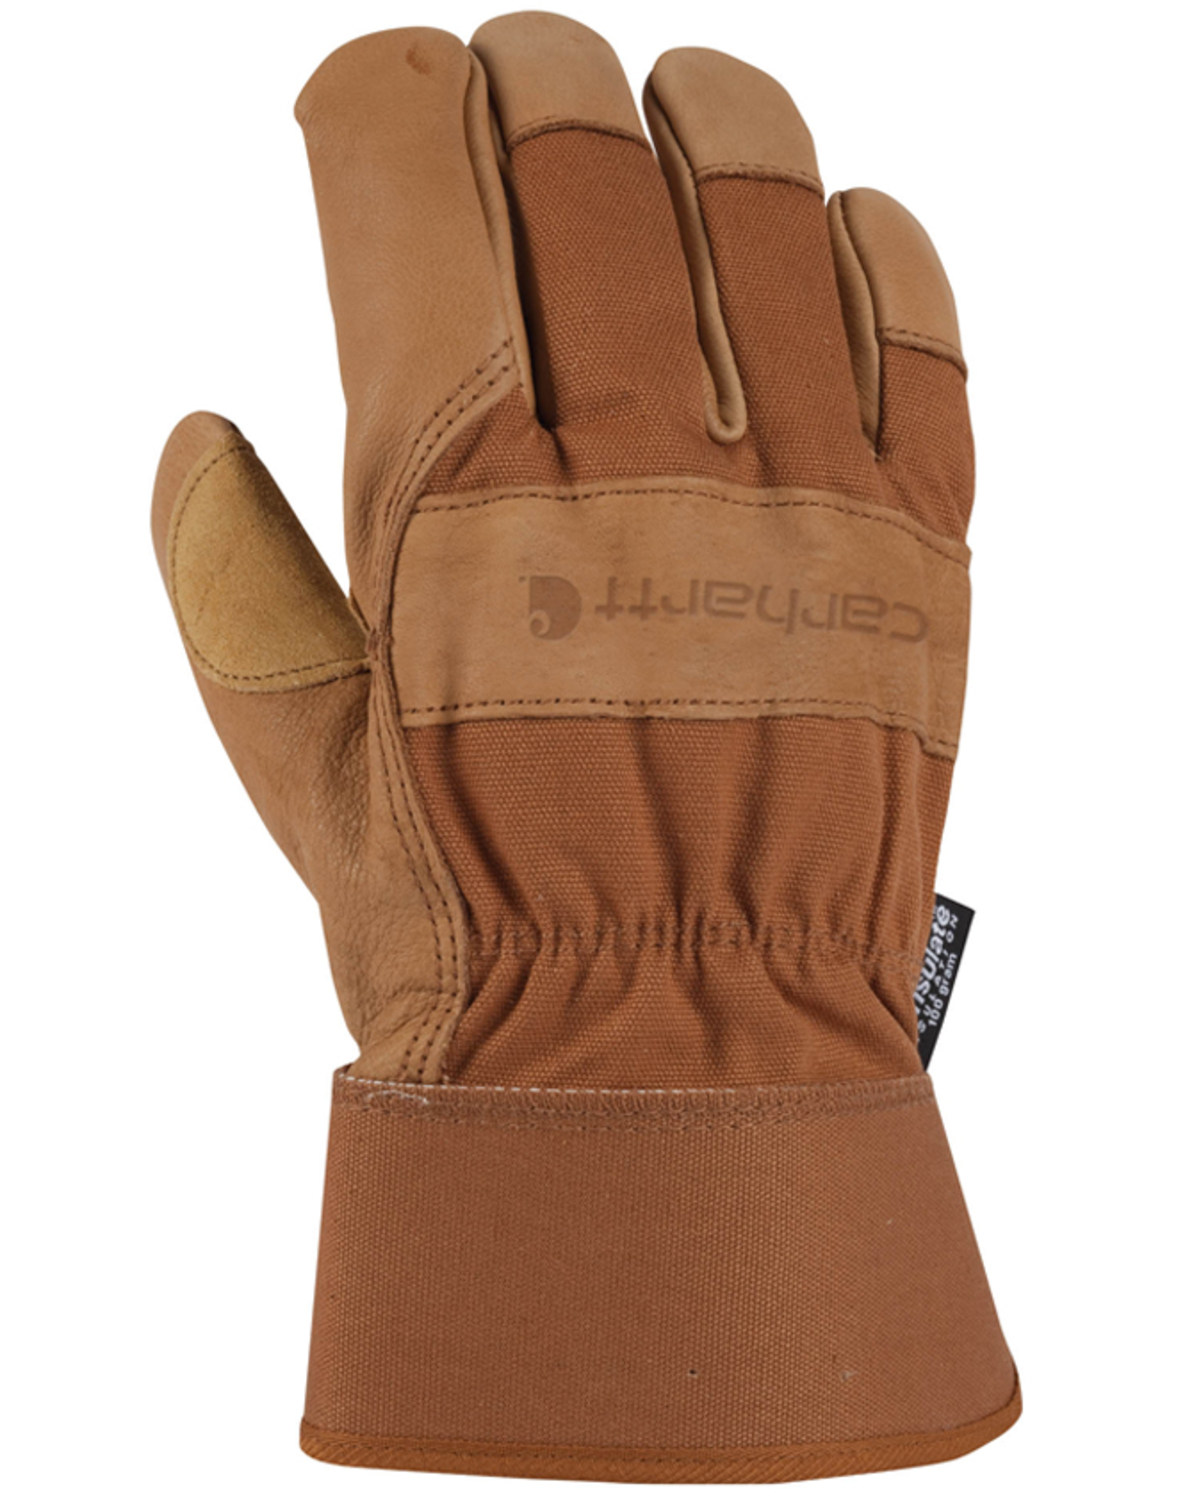 Carhartt Men's Insulated Grain Leather Safety Cuff Work Glove